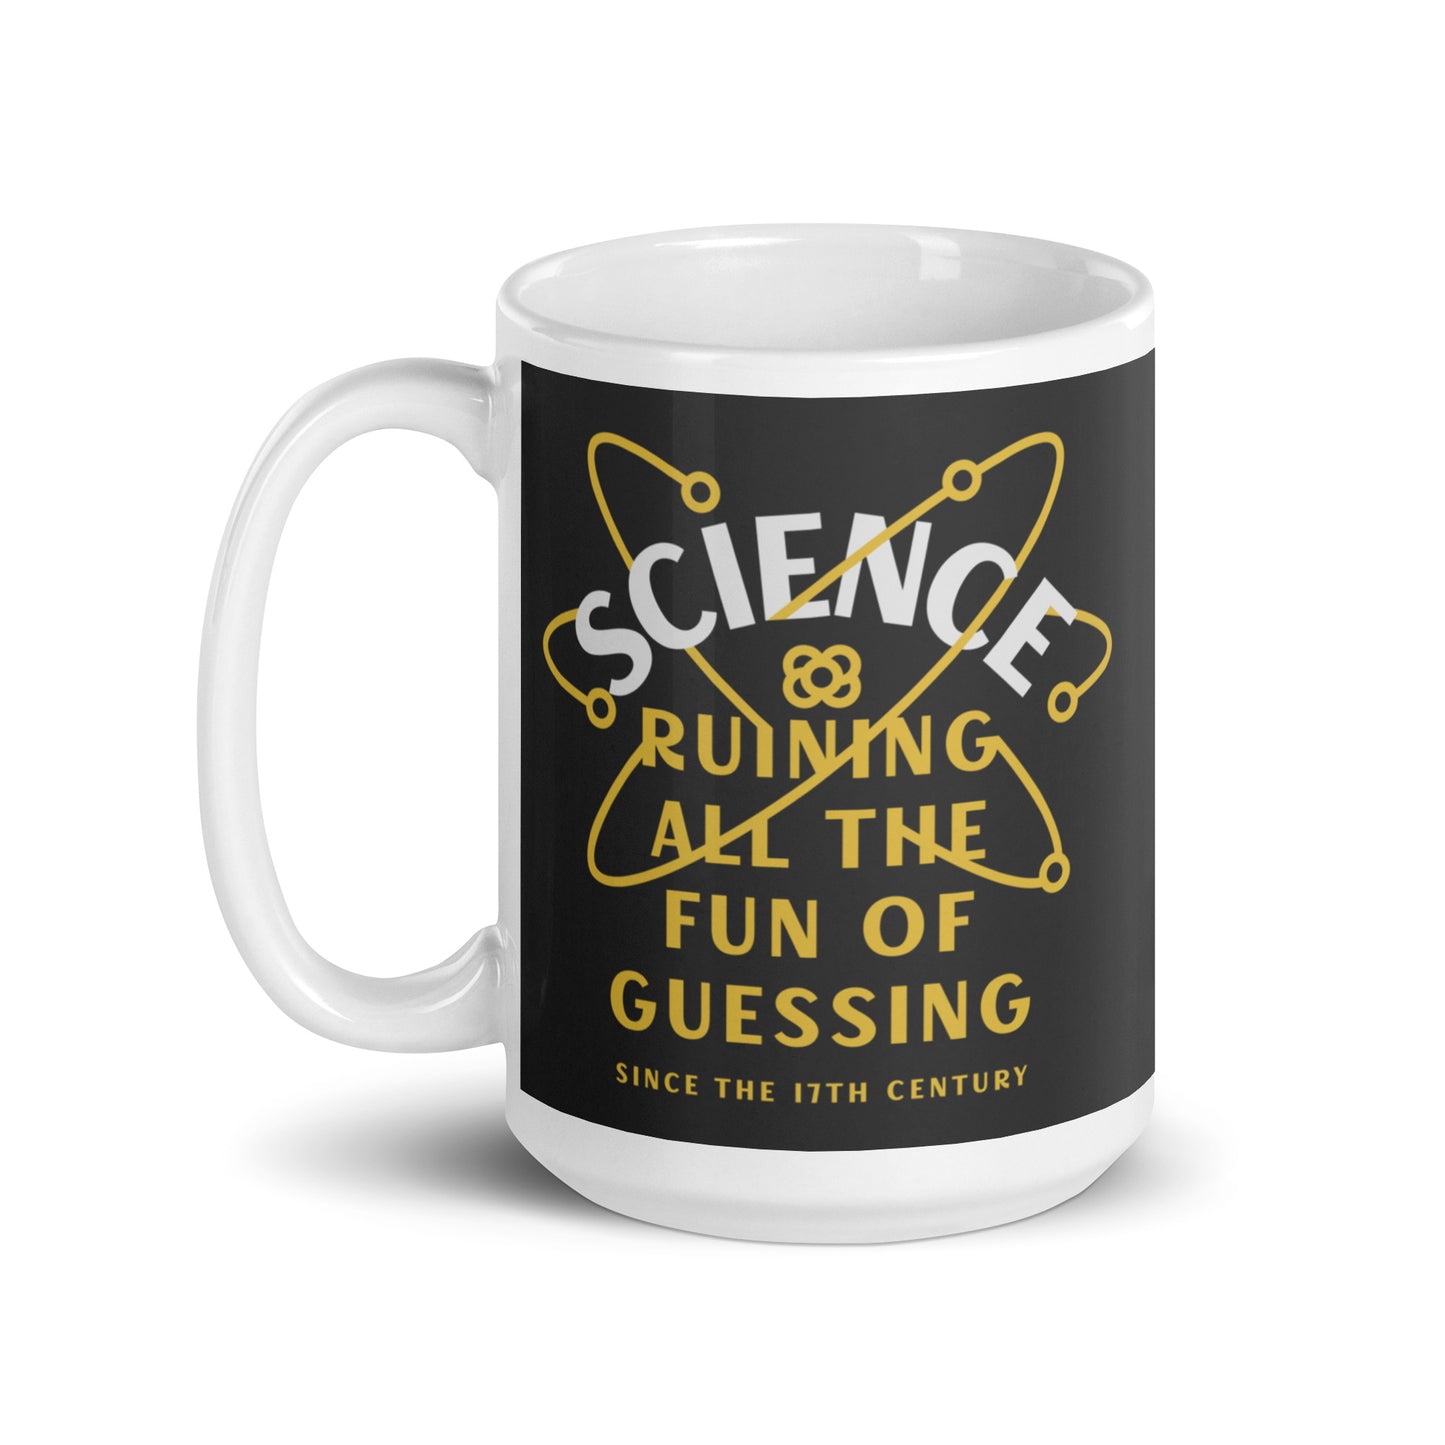 Science Ruining All The Fun Of Guessing Mug